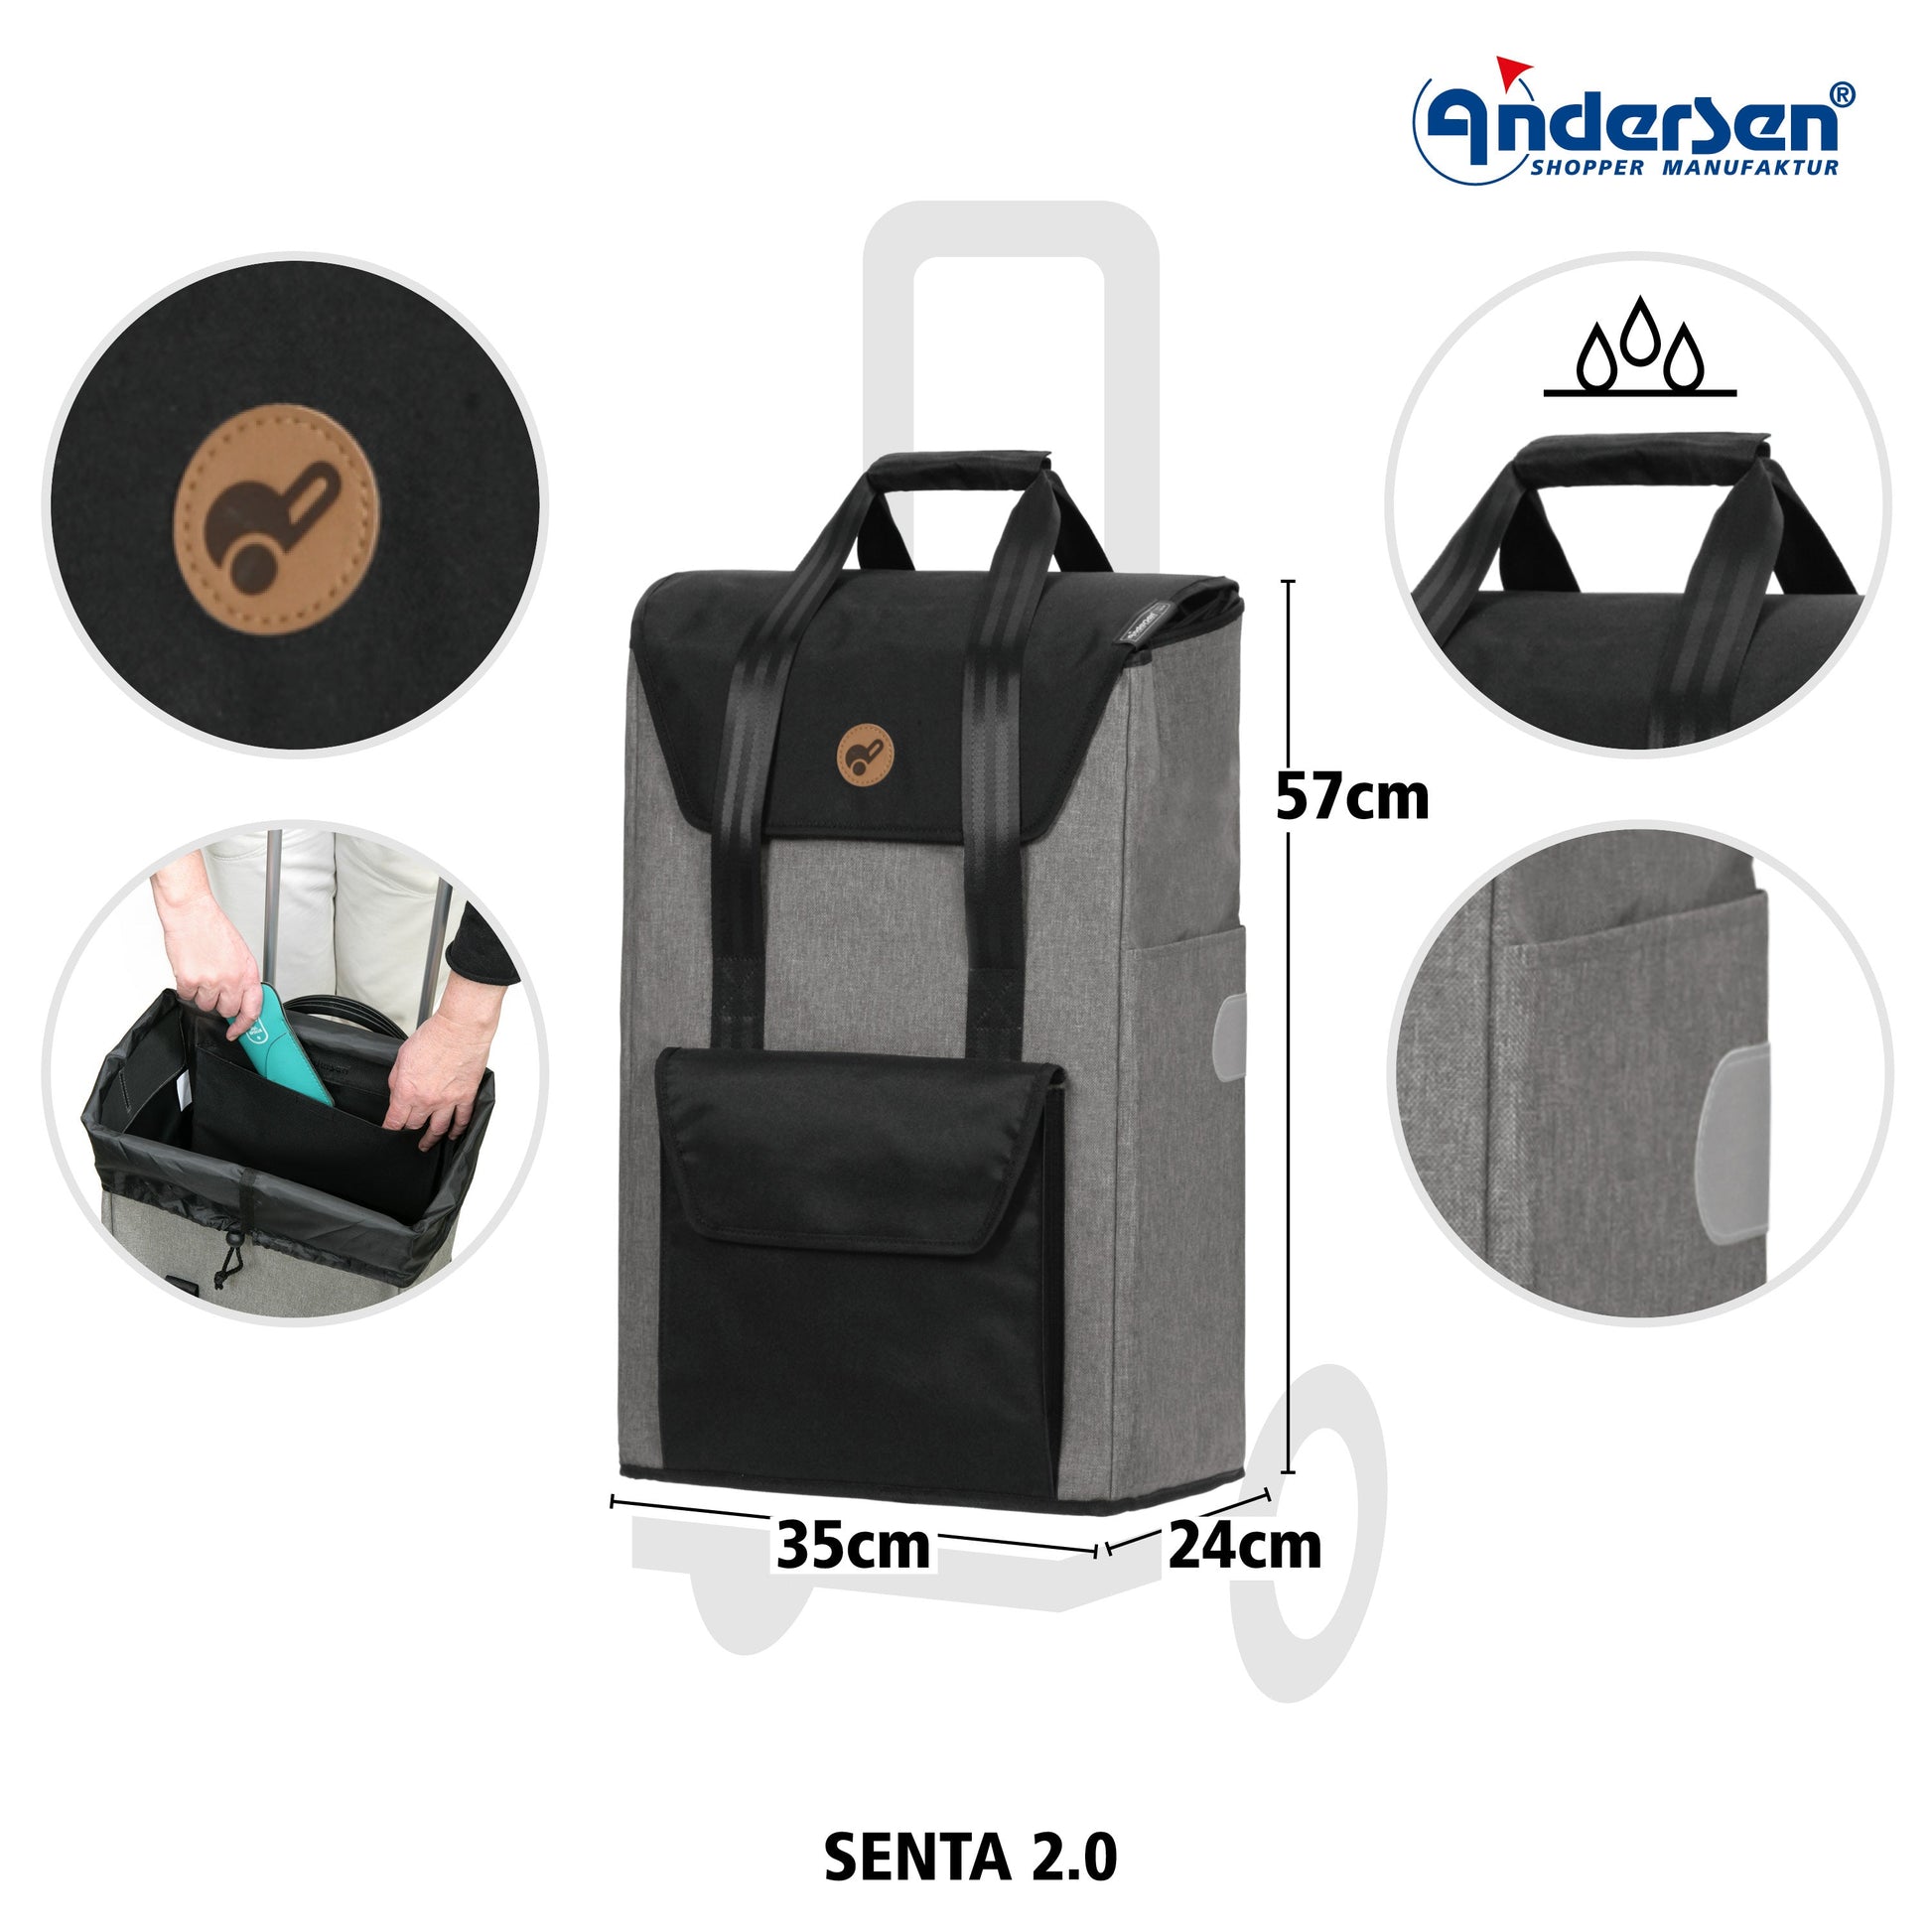 Andersen Shopper Manufaktur-Komfort Shopper Senta 2.0 grau-www.shopping-trolley.ch-bild3